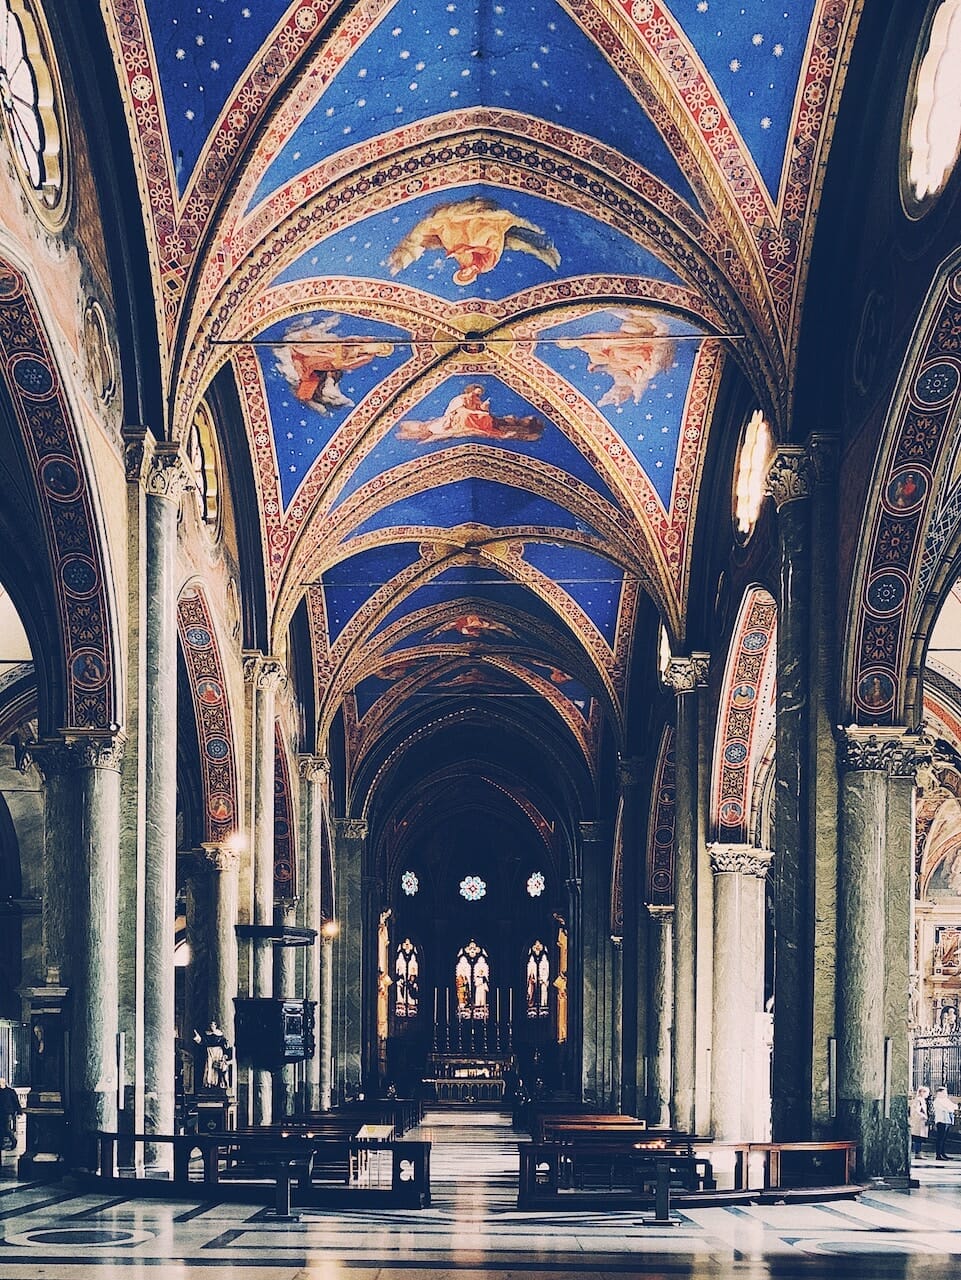 Impressive ceiling of the Roman church Santa Maria sopra Minerva